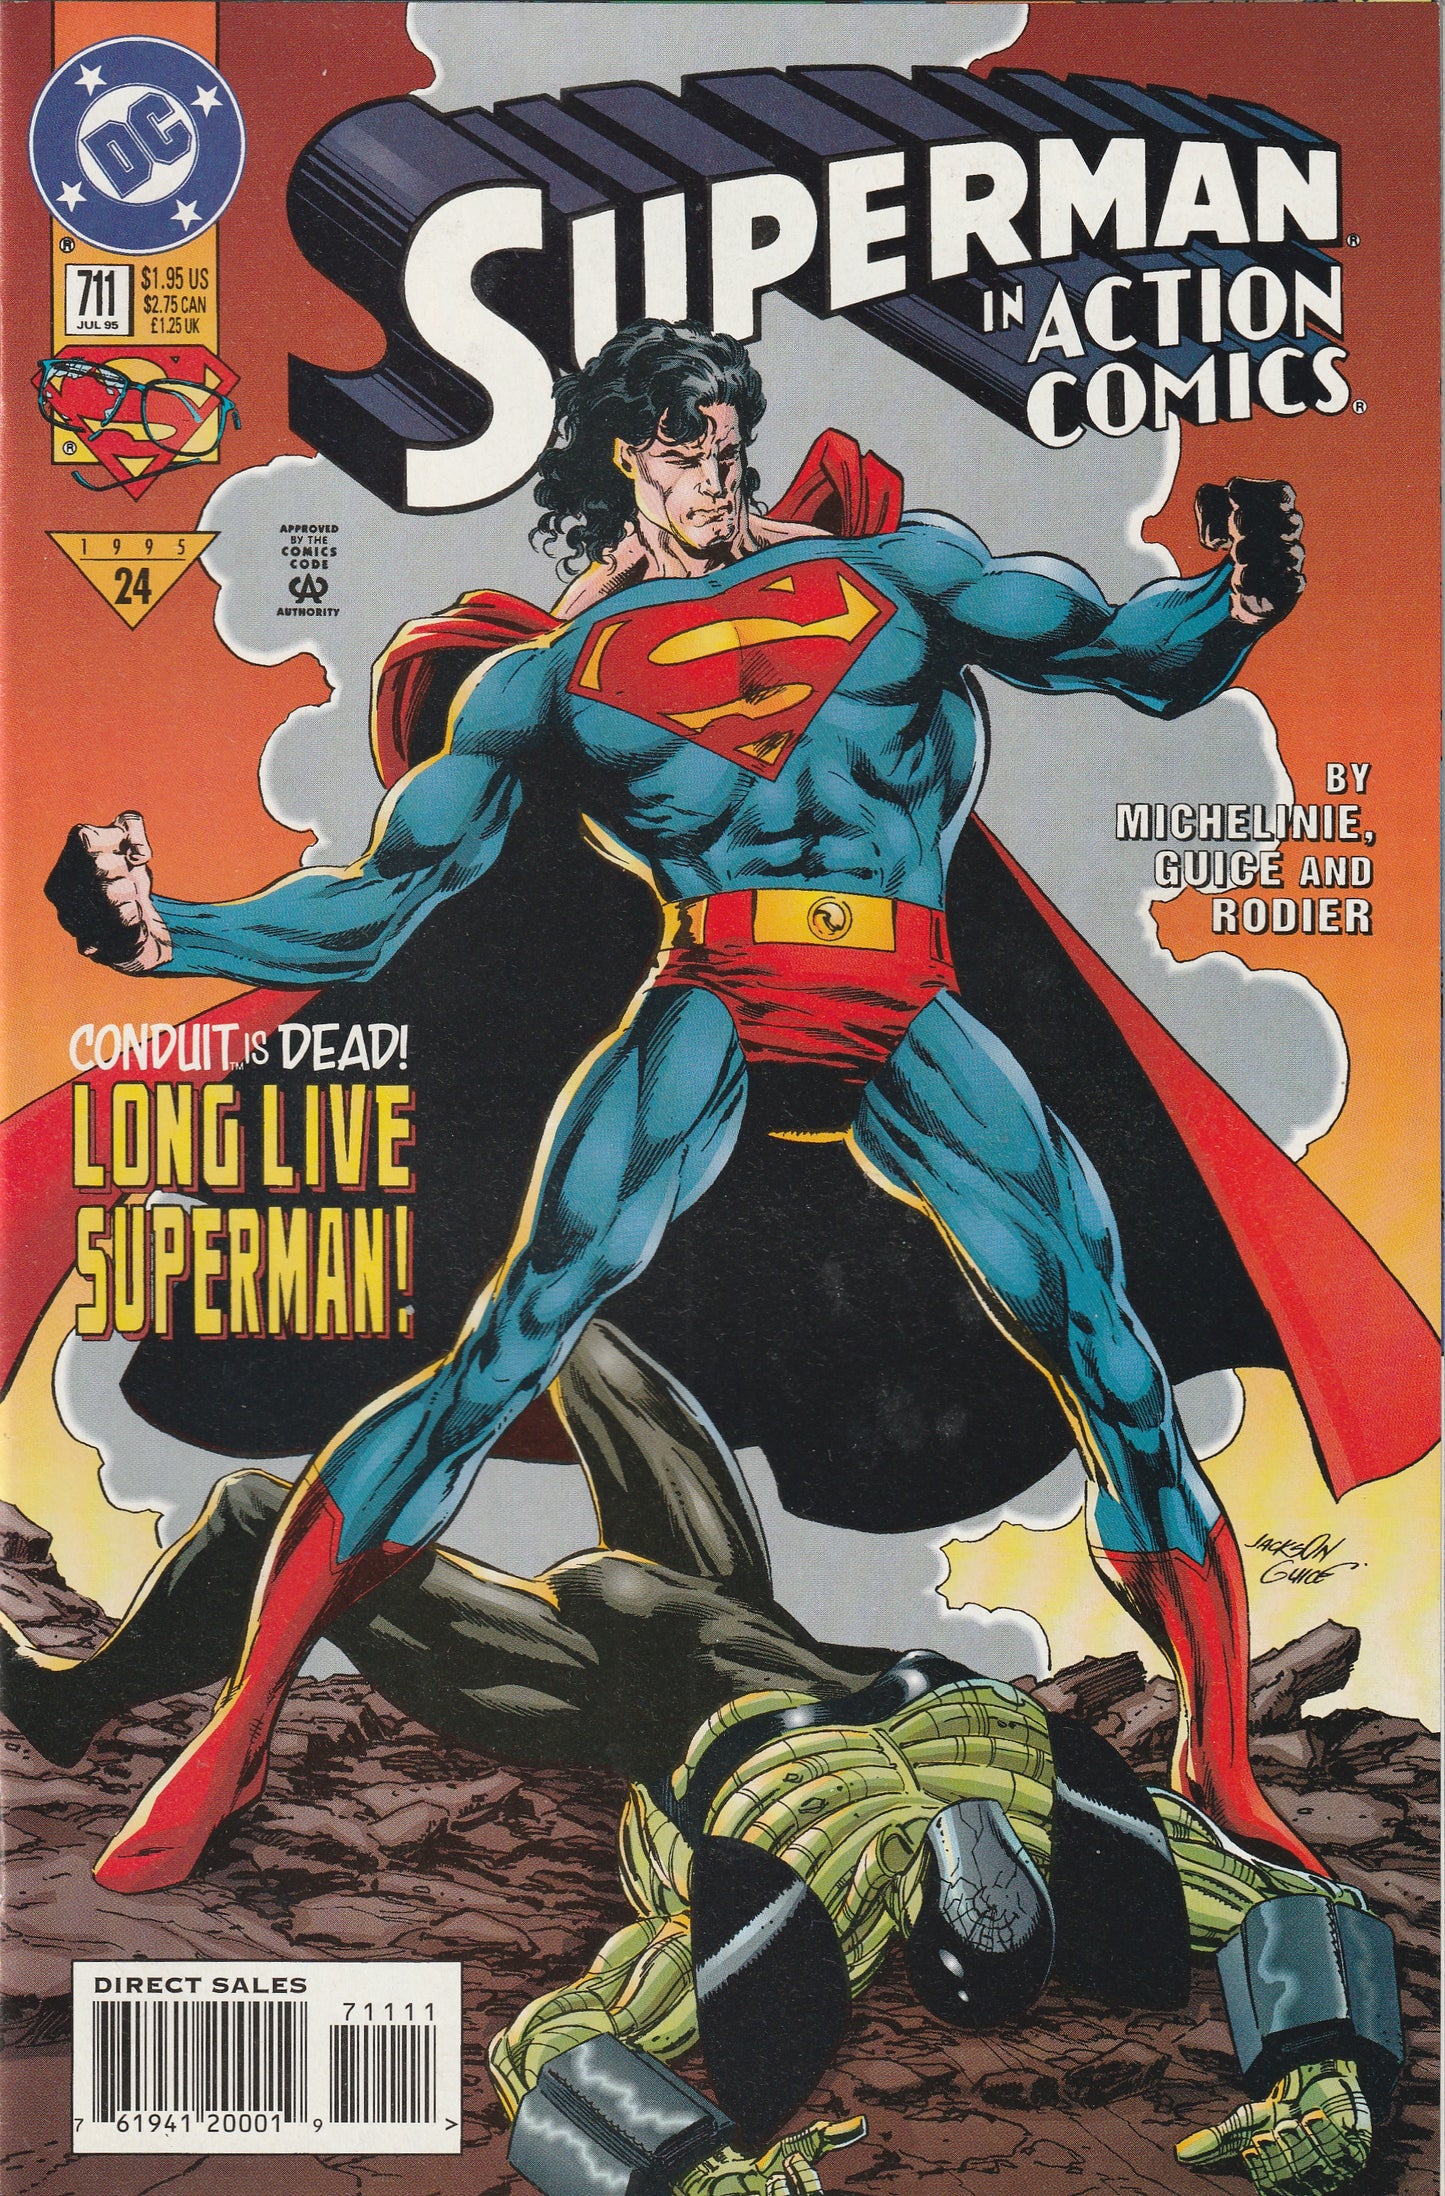 Action Comics #711 (1995)